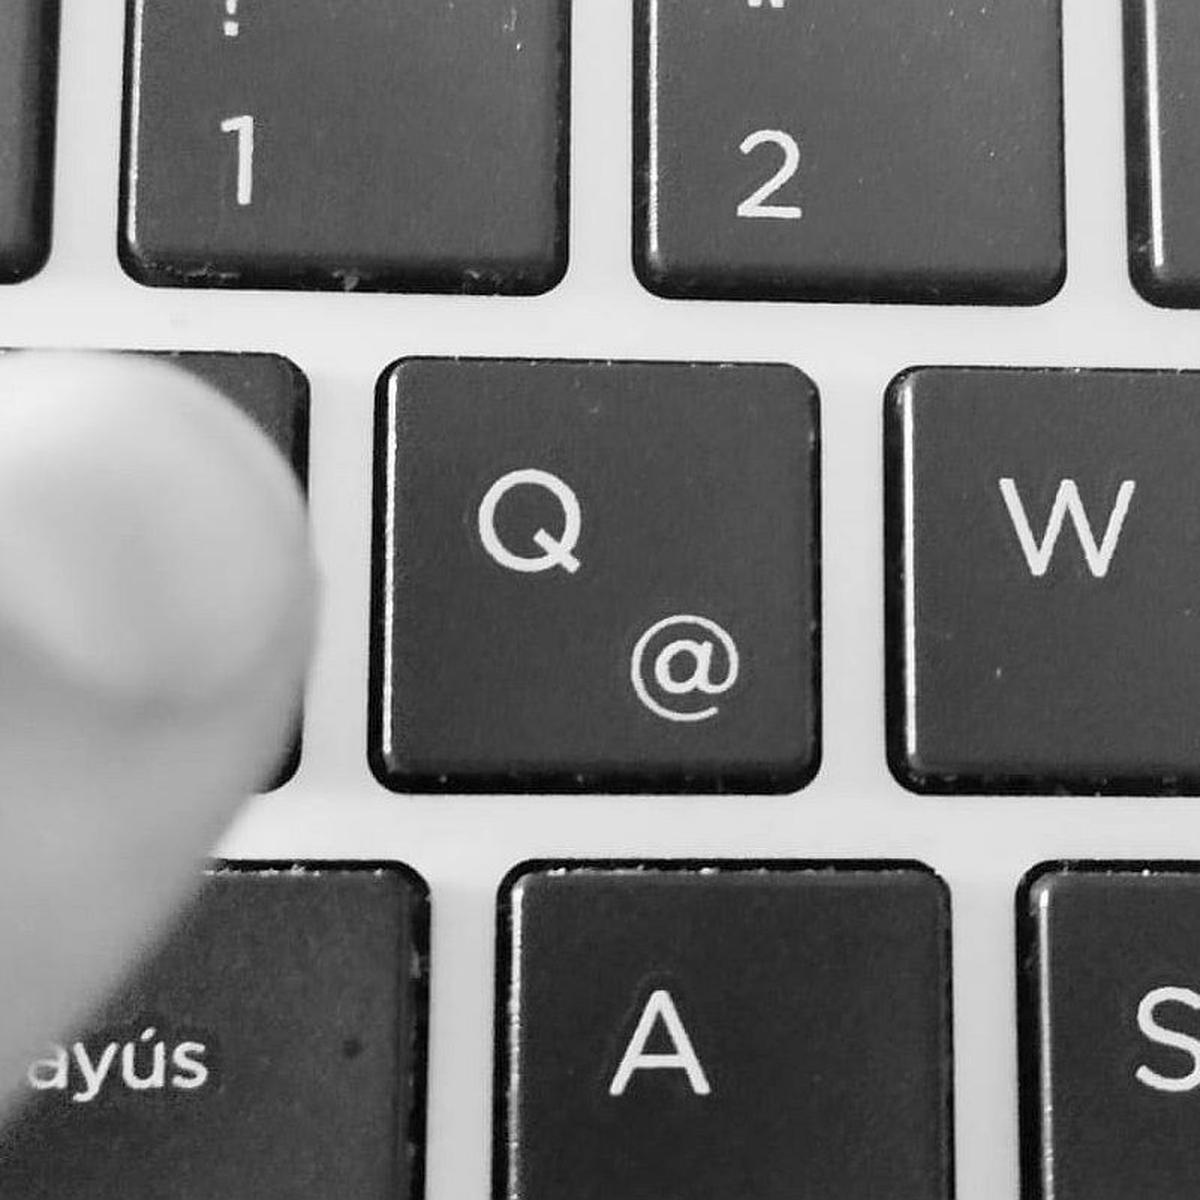 Cómo agregar un teclado adicional a tu laptop: solución fácil - Blog de  Info-Computer